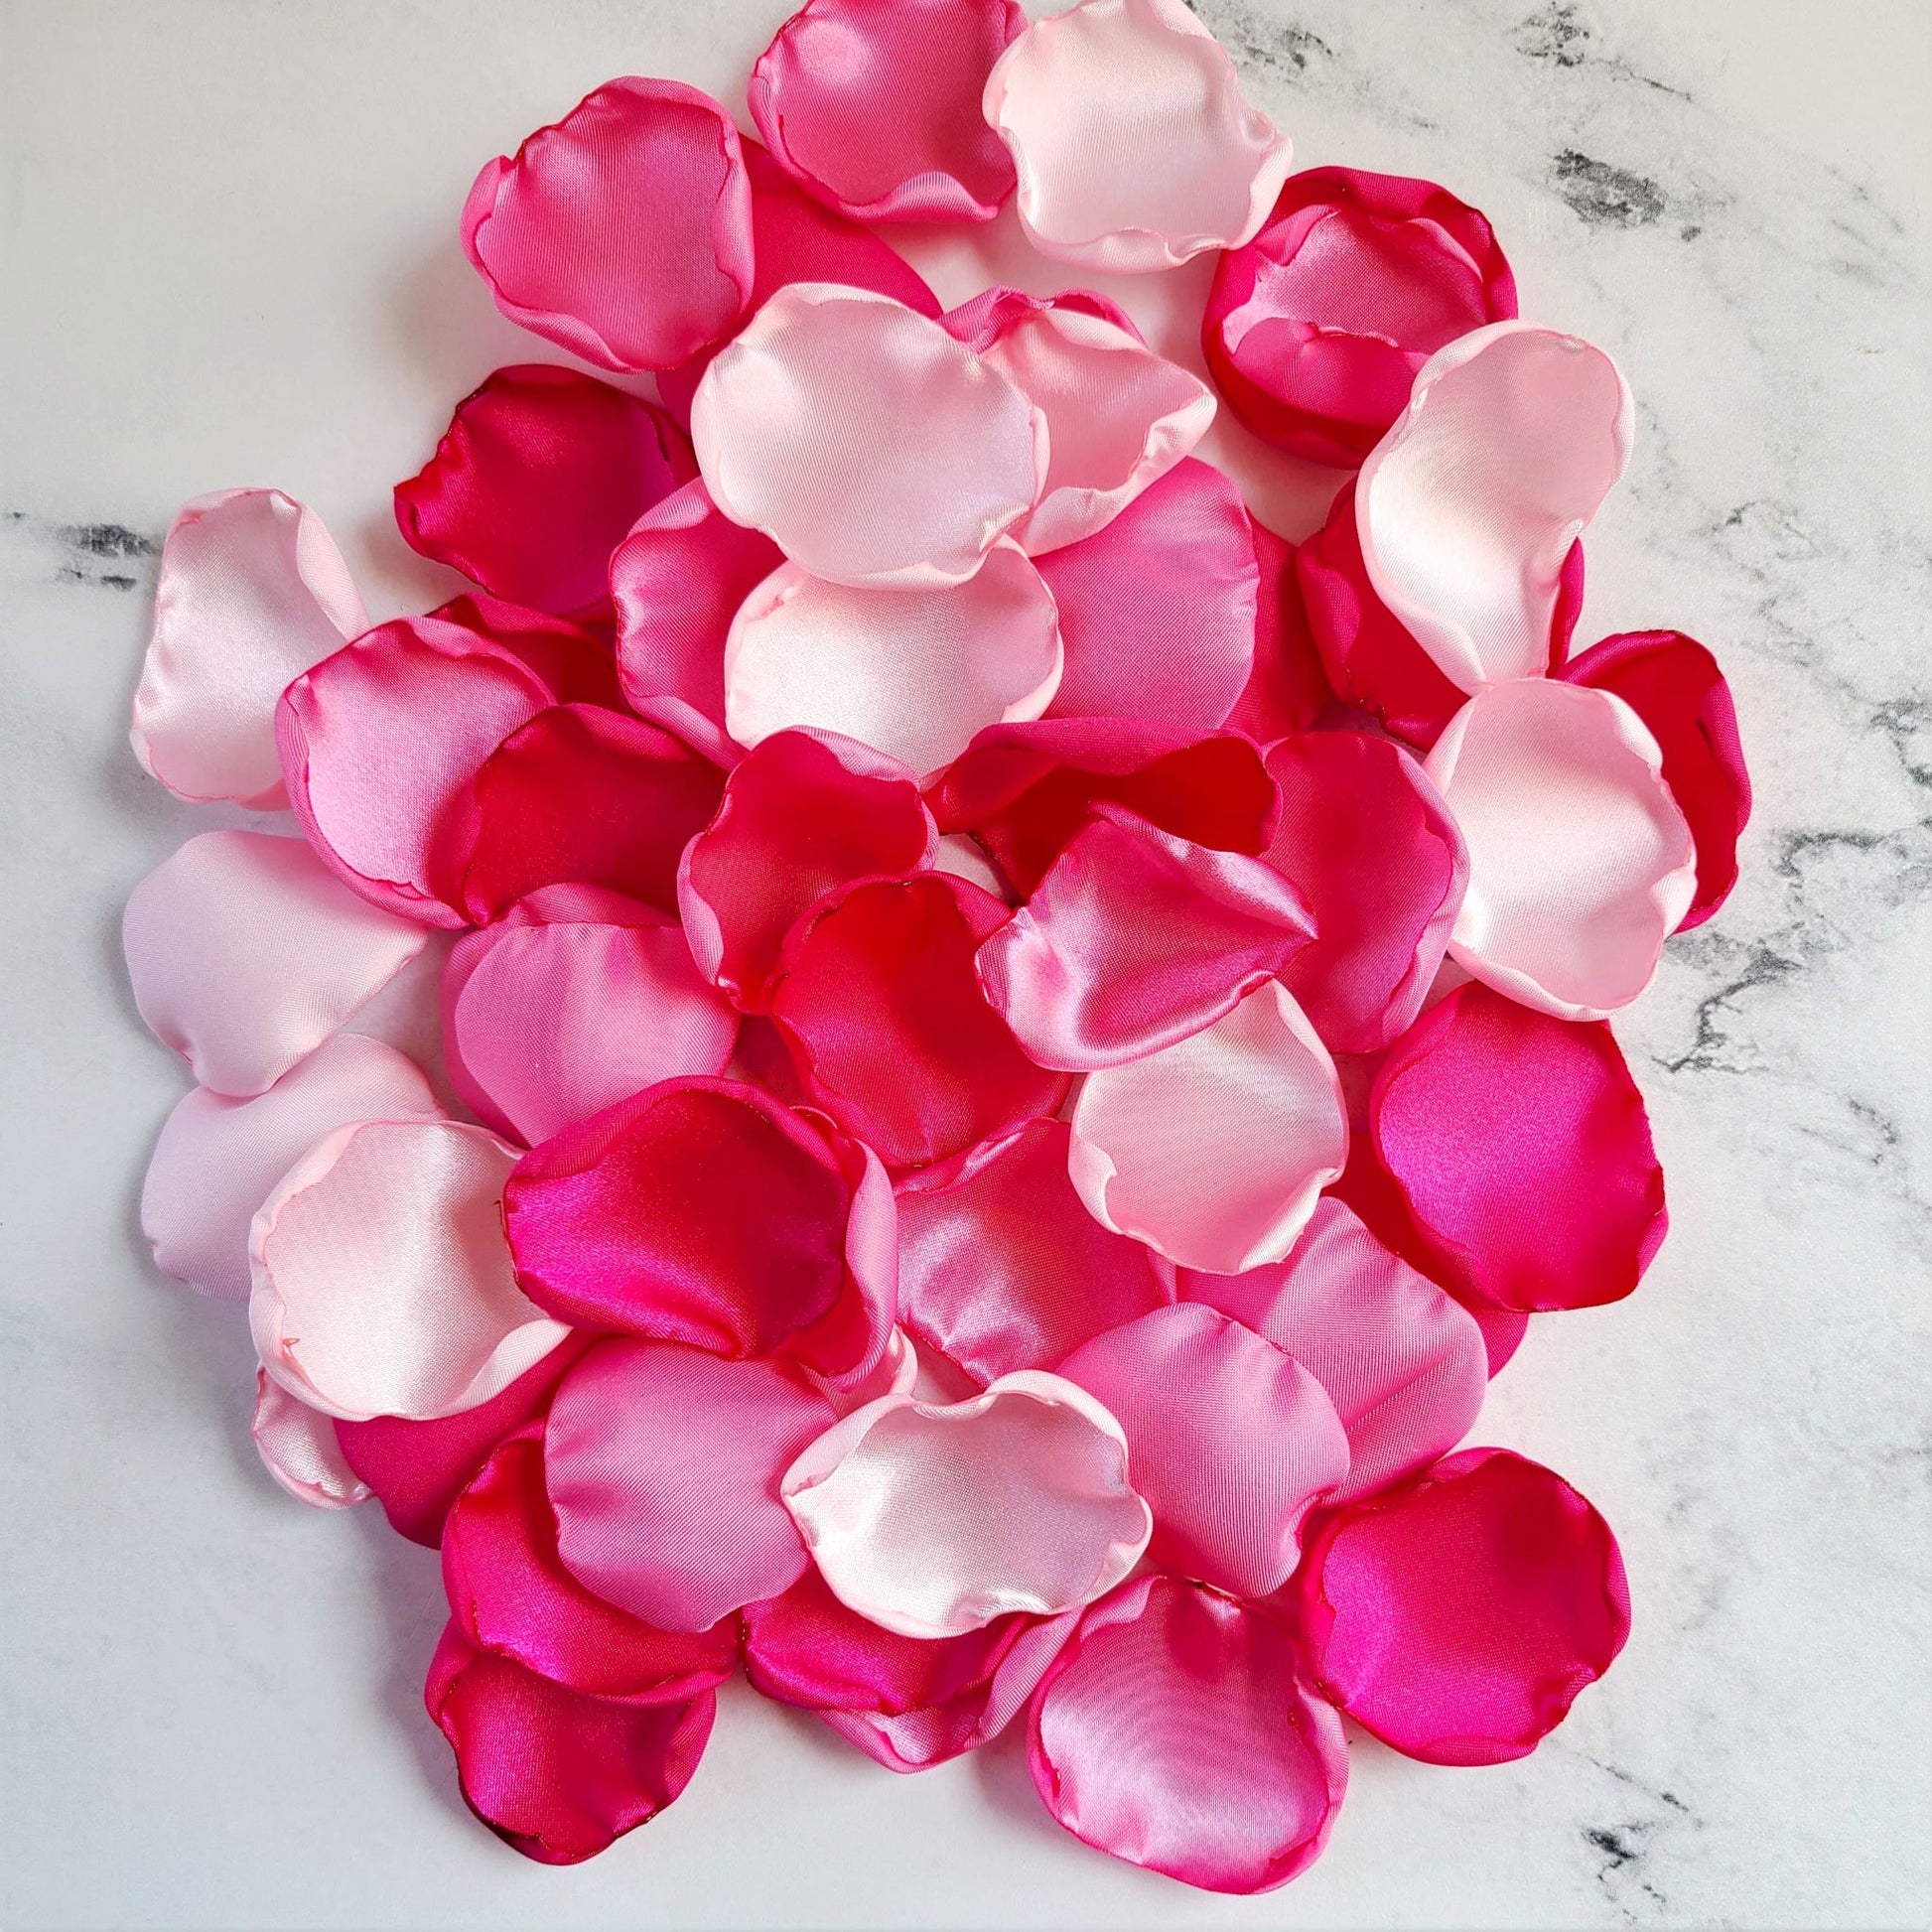 Pink Rose Petals for Barbiecore Wedding Decor. Shades of Pink flower petals